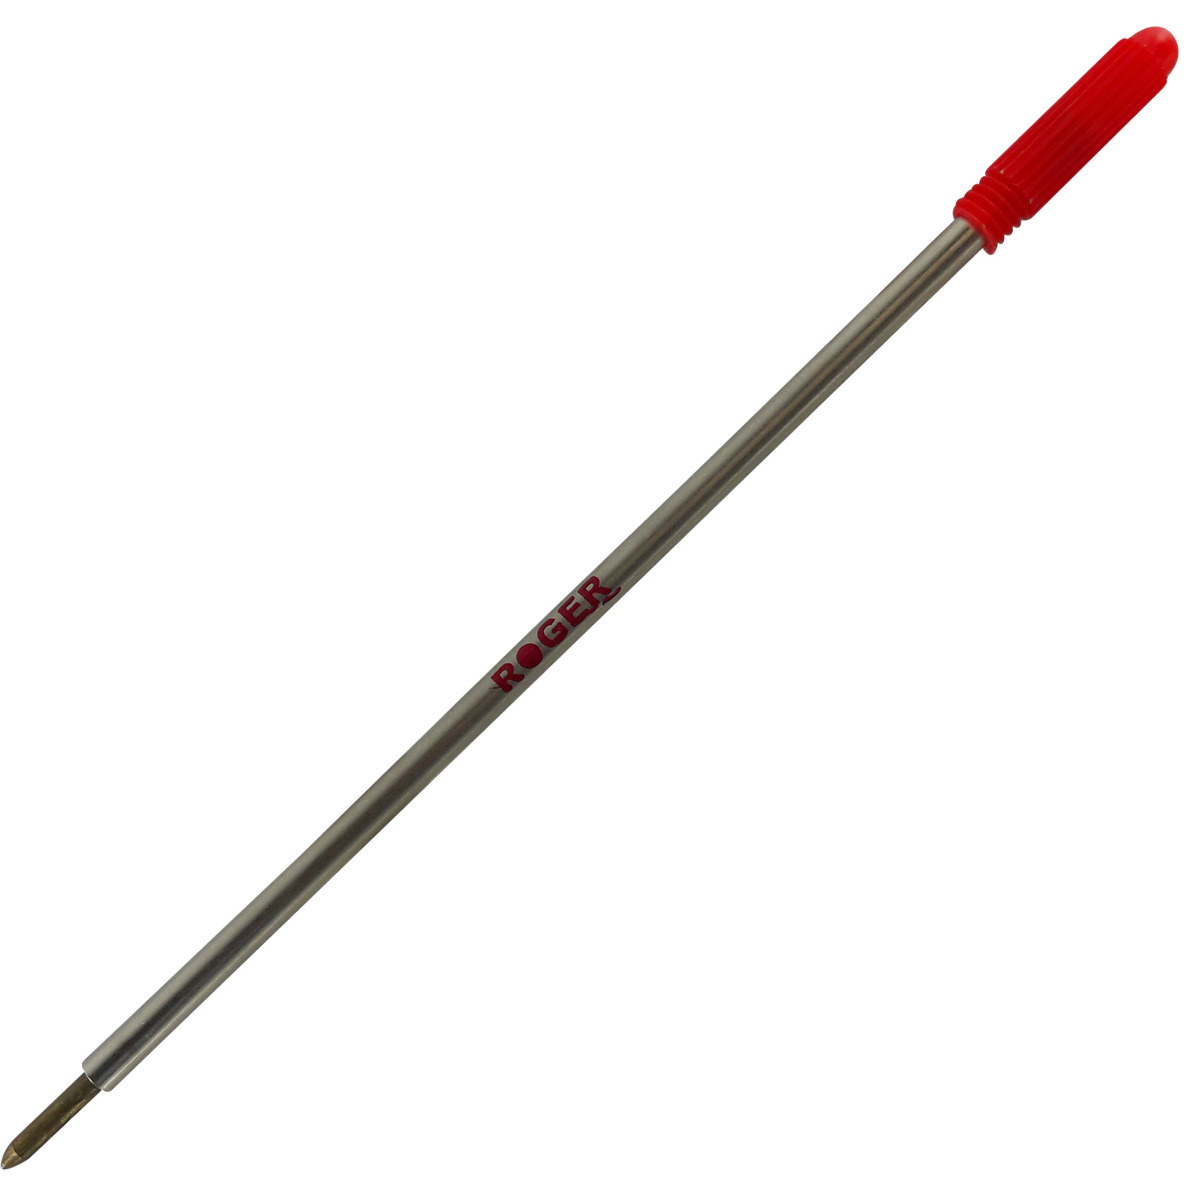 Roger Model ; 12497 Medium Tip Slim Type Red ink Refill